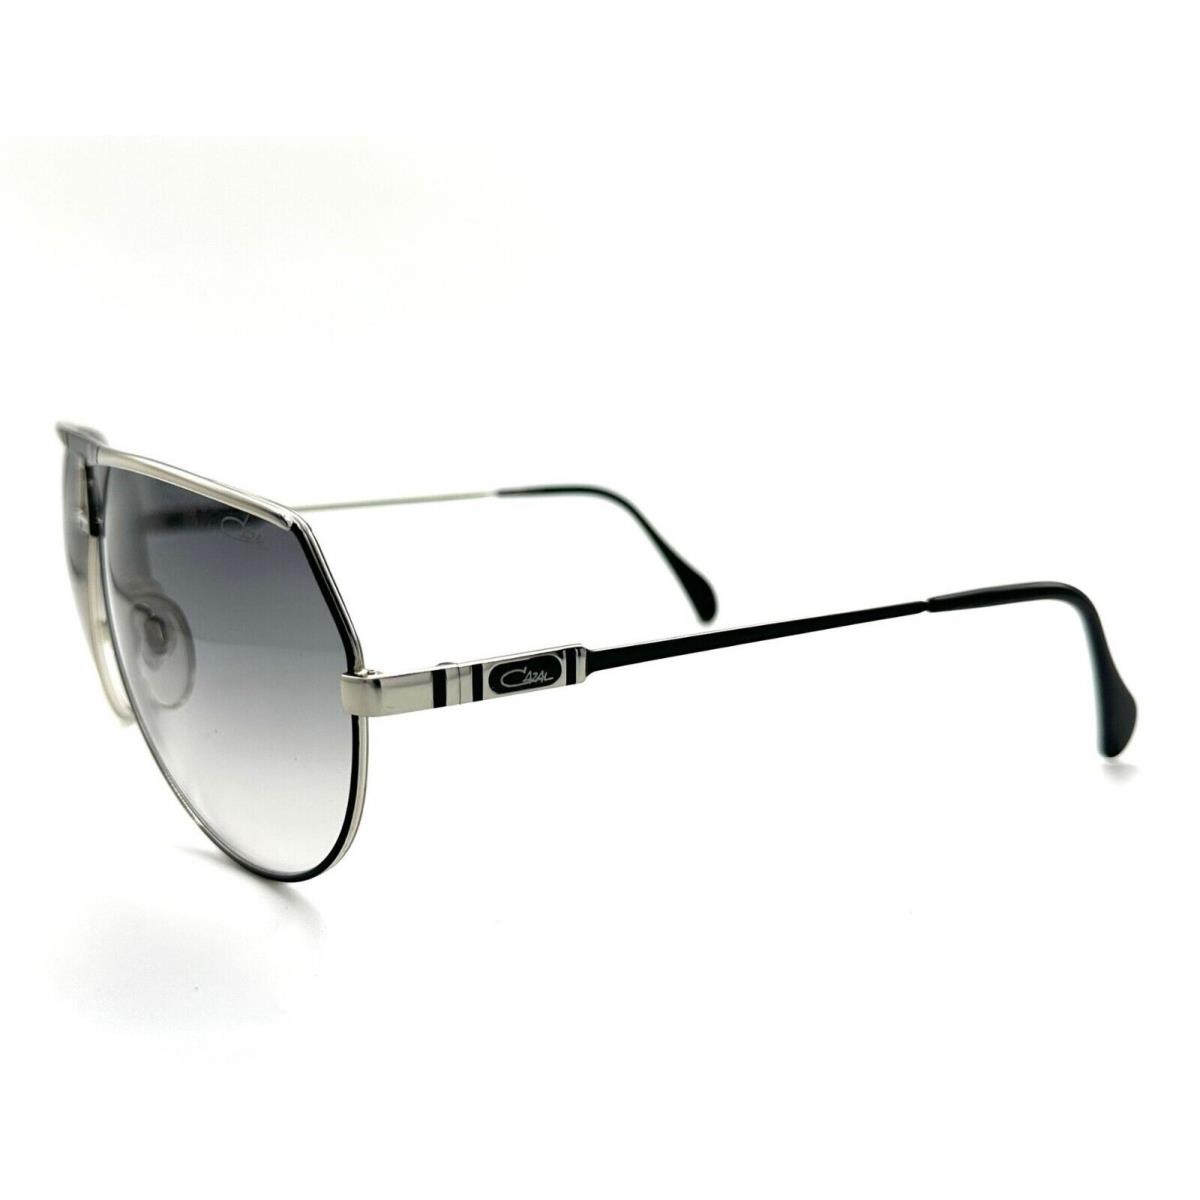 Cazal sunglasses  - Frame: Black-Silver, Lens: Grey 1